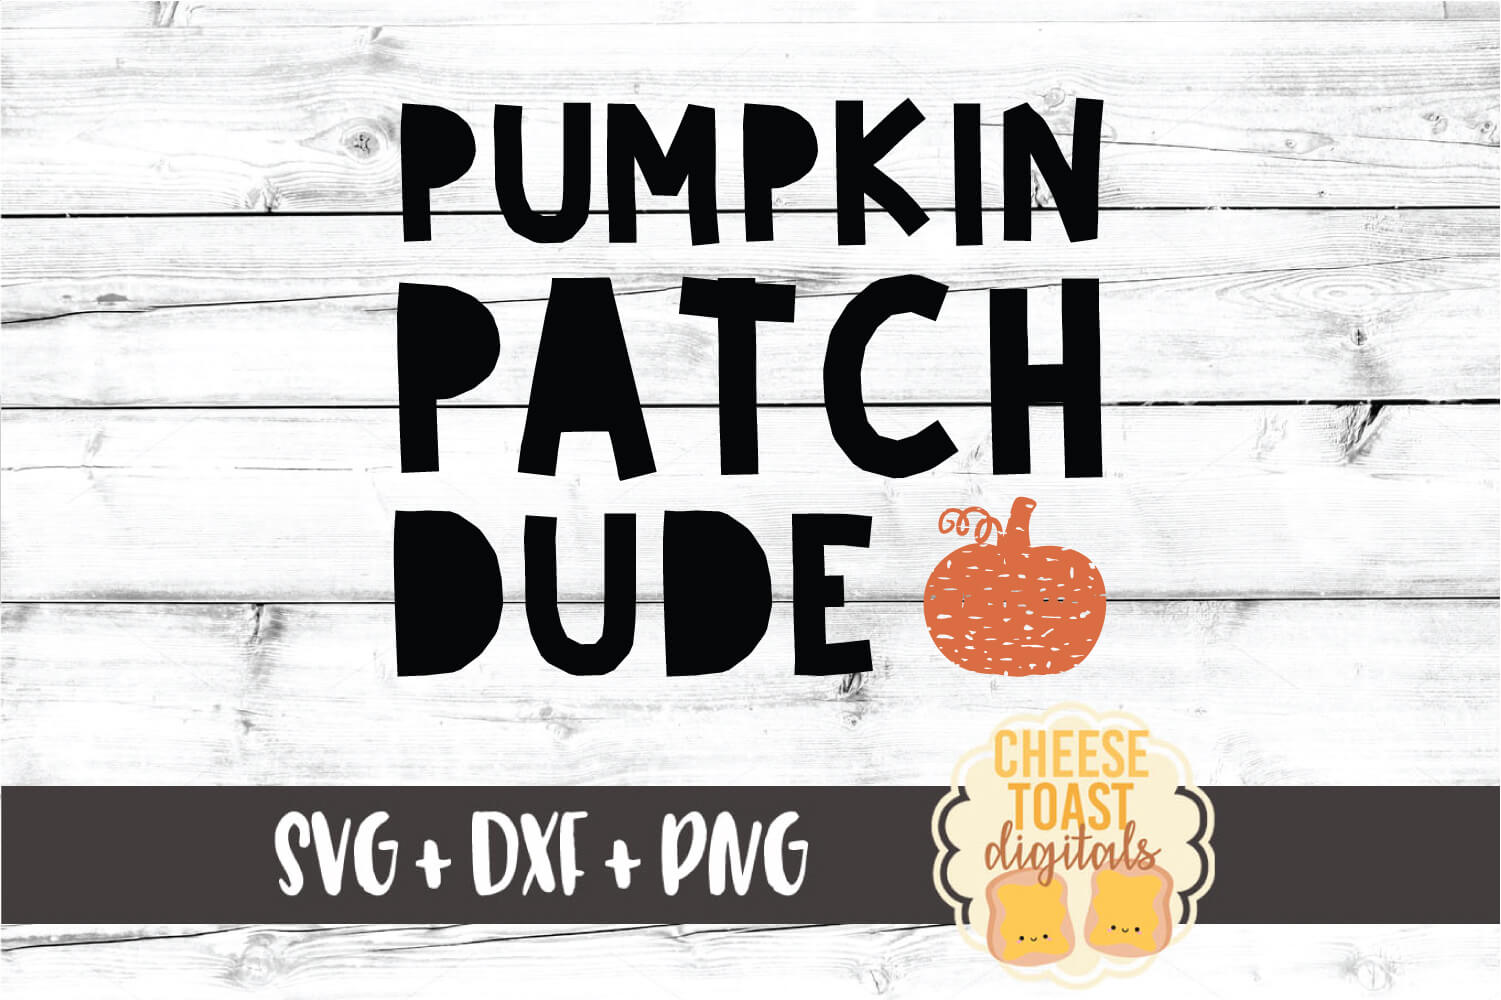 Download Pumpkin Patch Dude - Boy Halloween SVG PNG DXF Cut Files